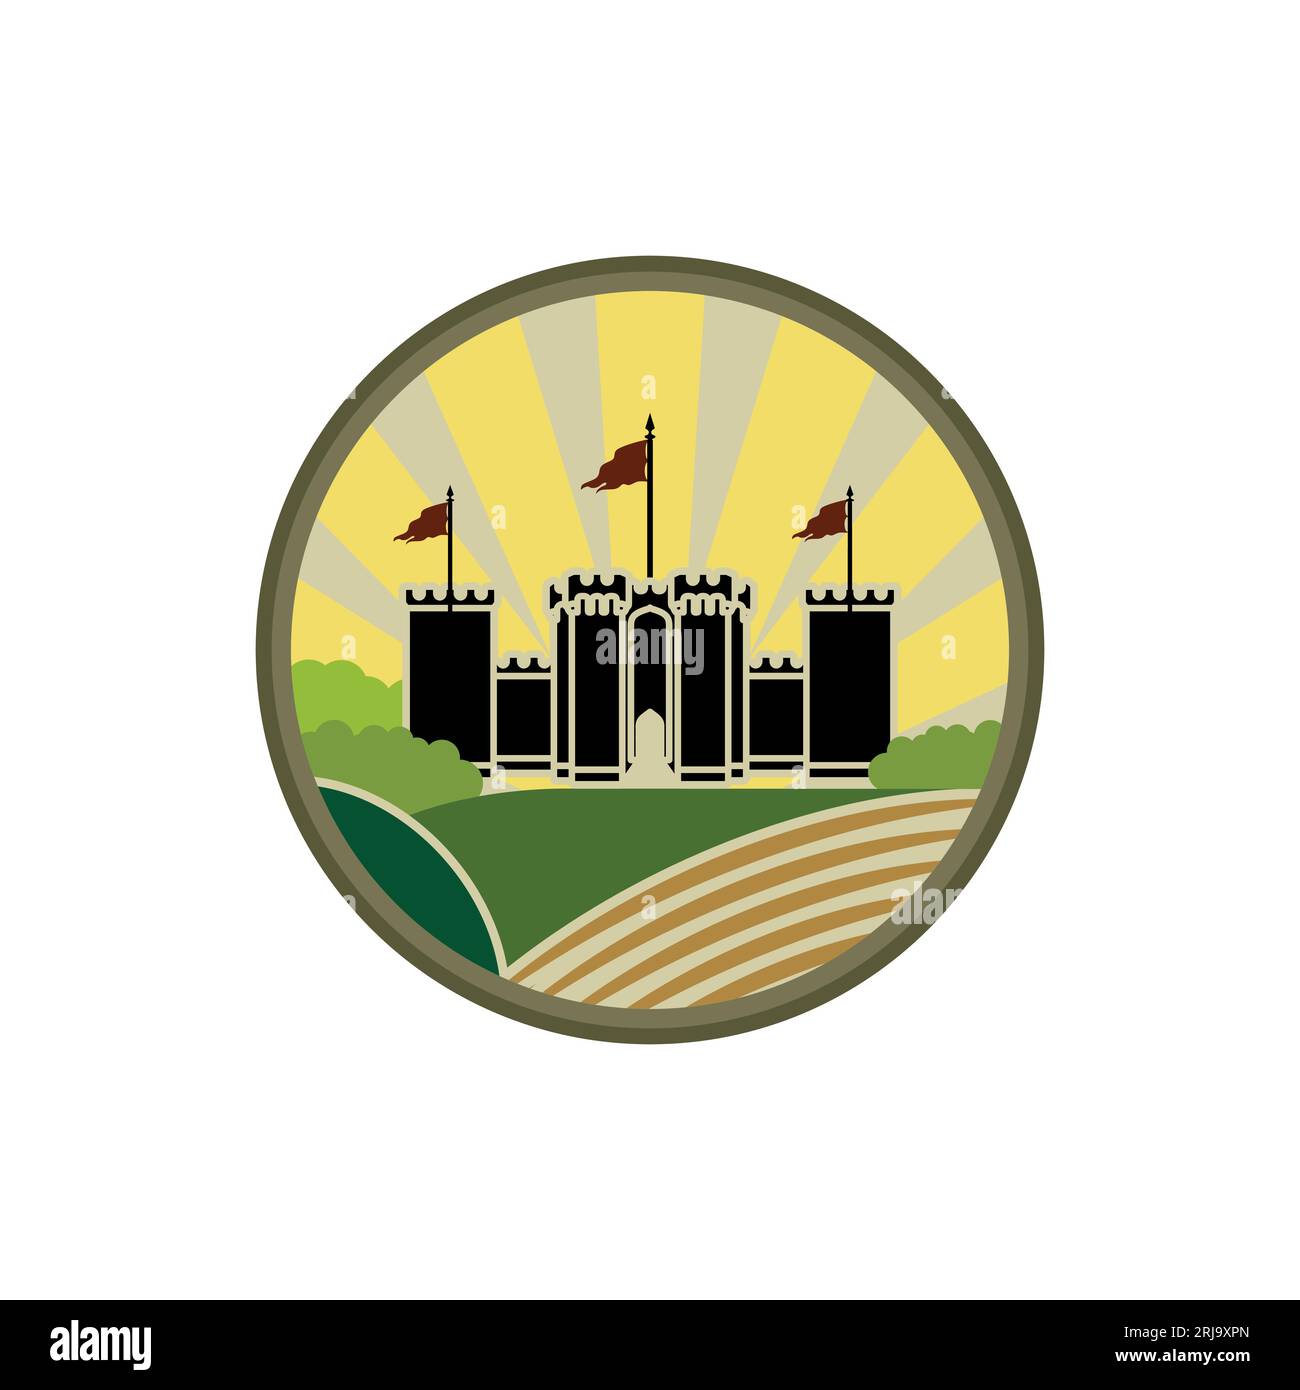 Kingdom Or Castle And Farm Logo Label Illustration Stock Vector